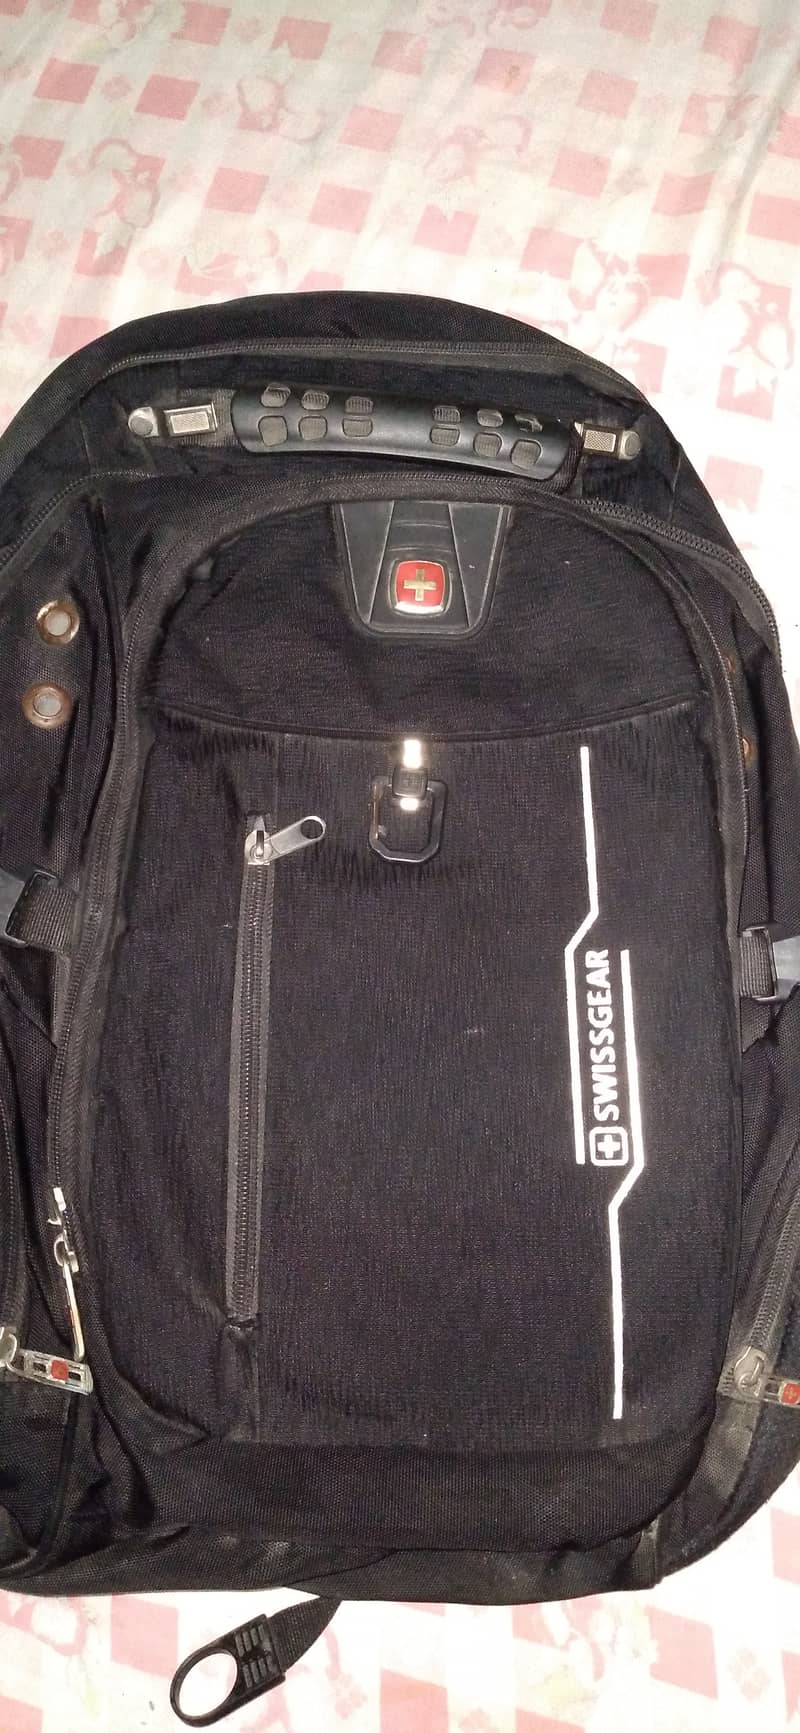 SwissGear Laptop Bag with Gadgets 0